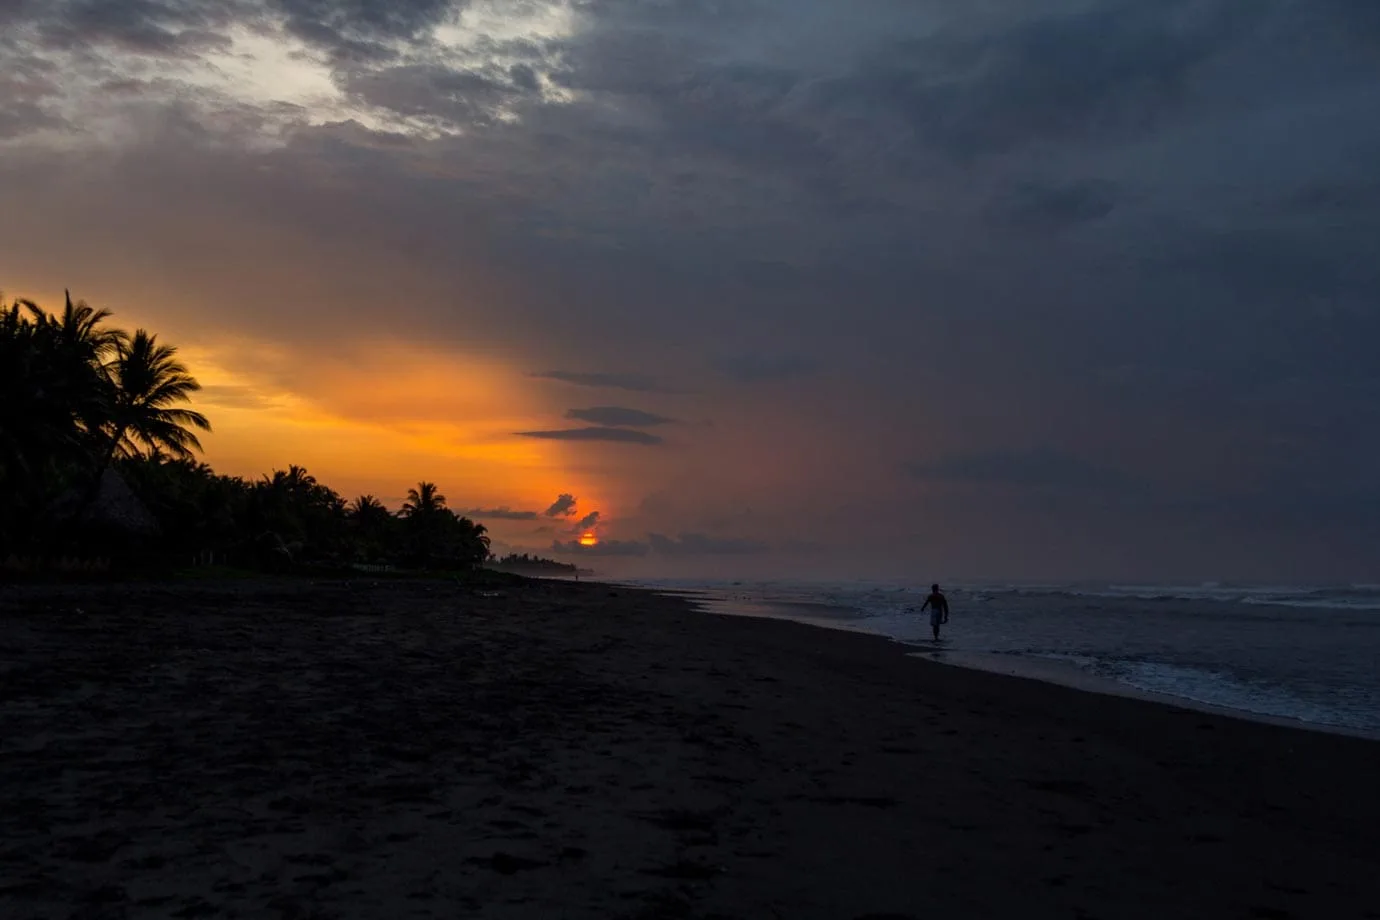 Surfing in El Salvador at sunrise